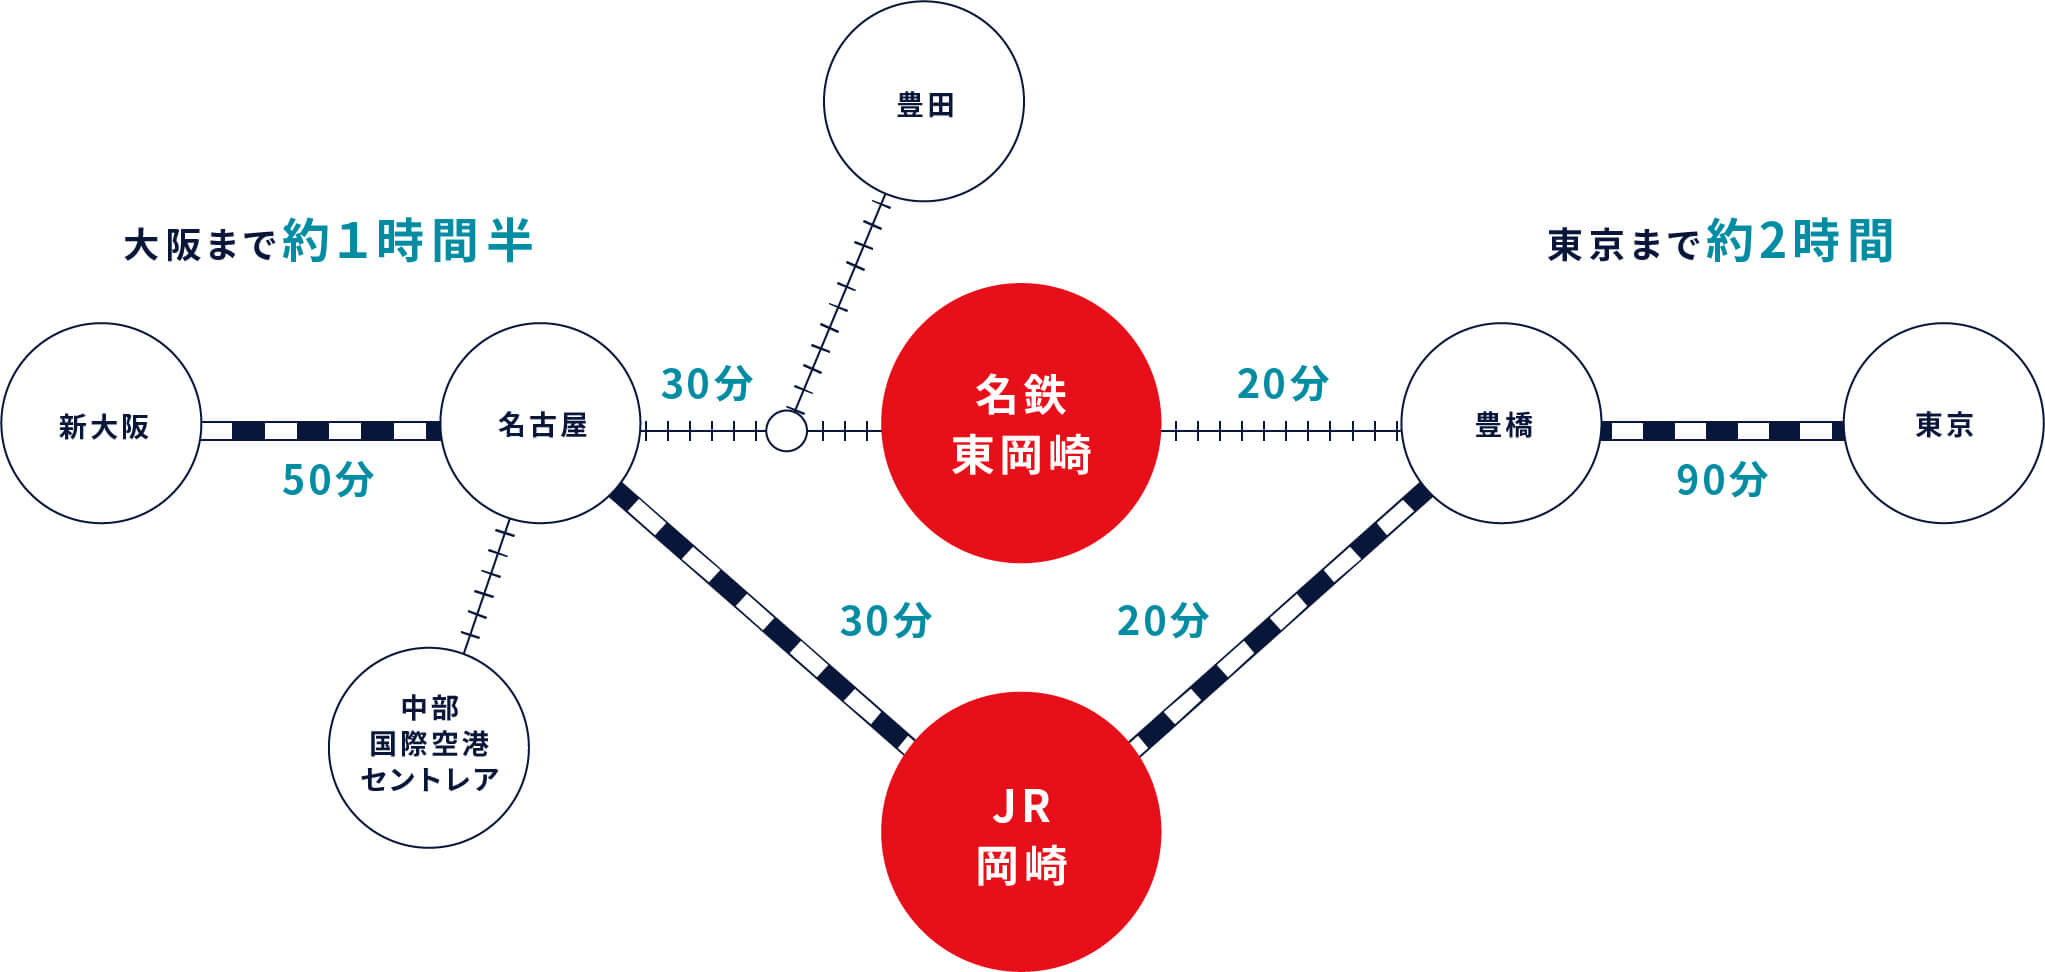 JR岡崎駅からの各方面へのMAP図